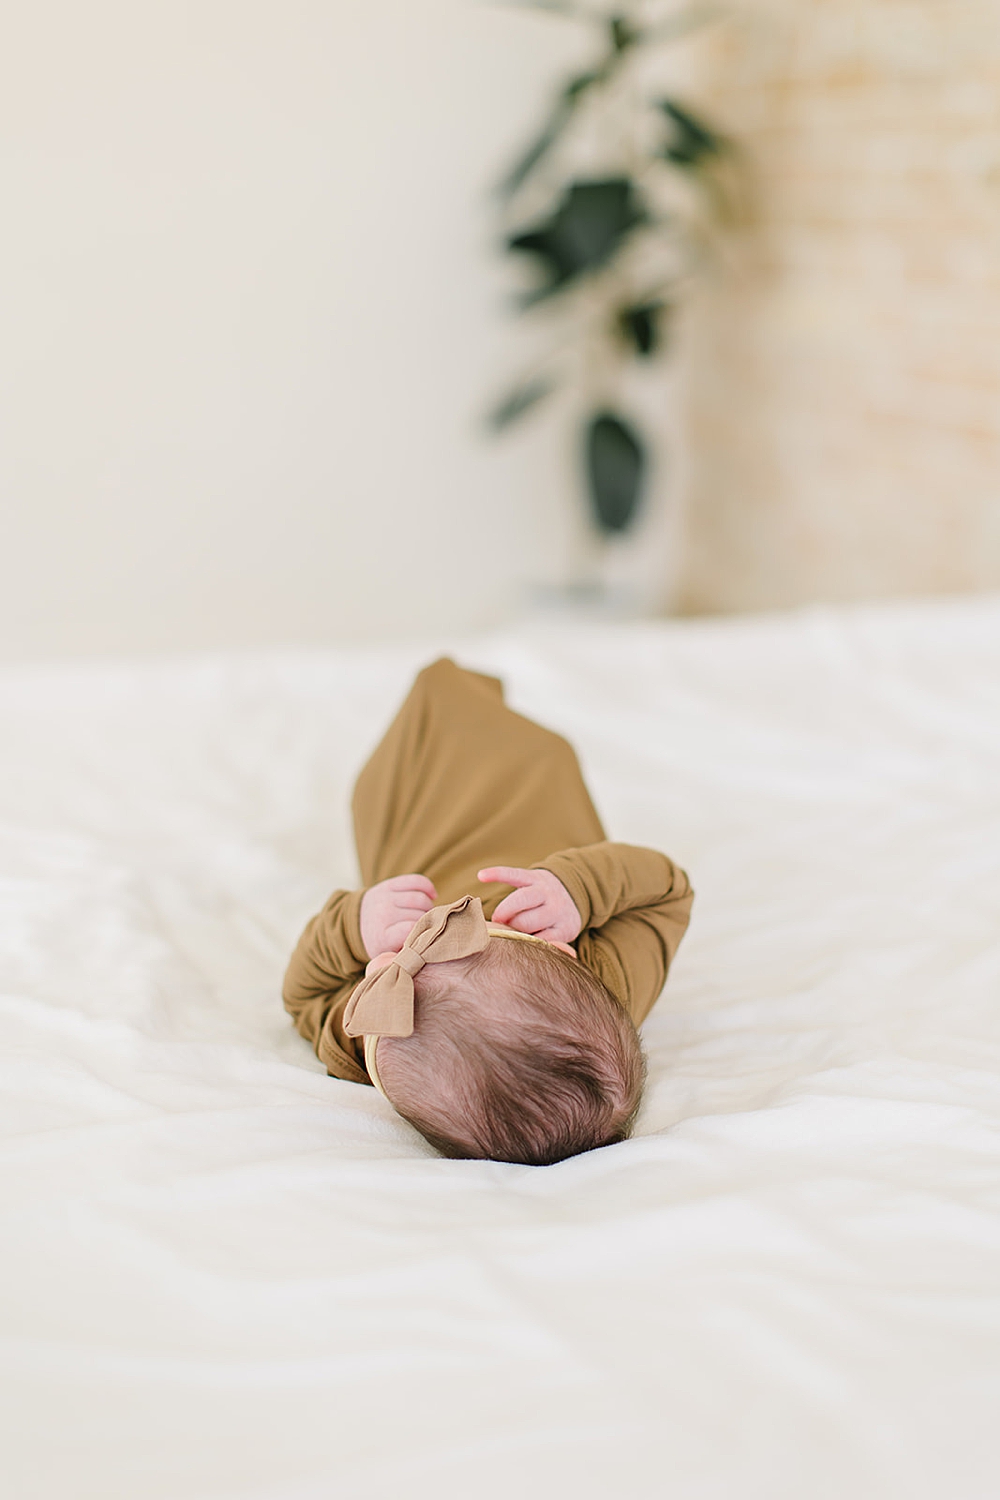 Baby L | Salt Lake Newborn Photographer